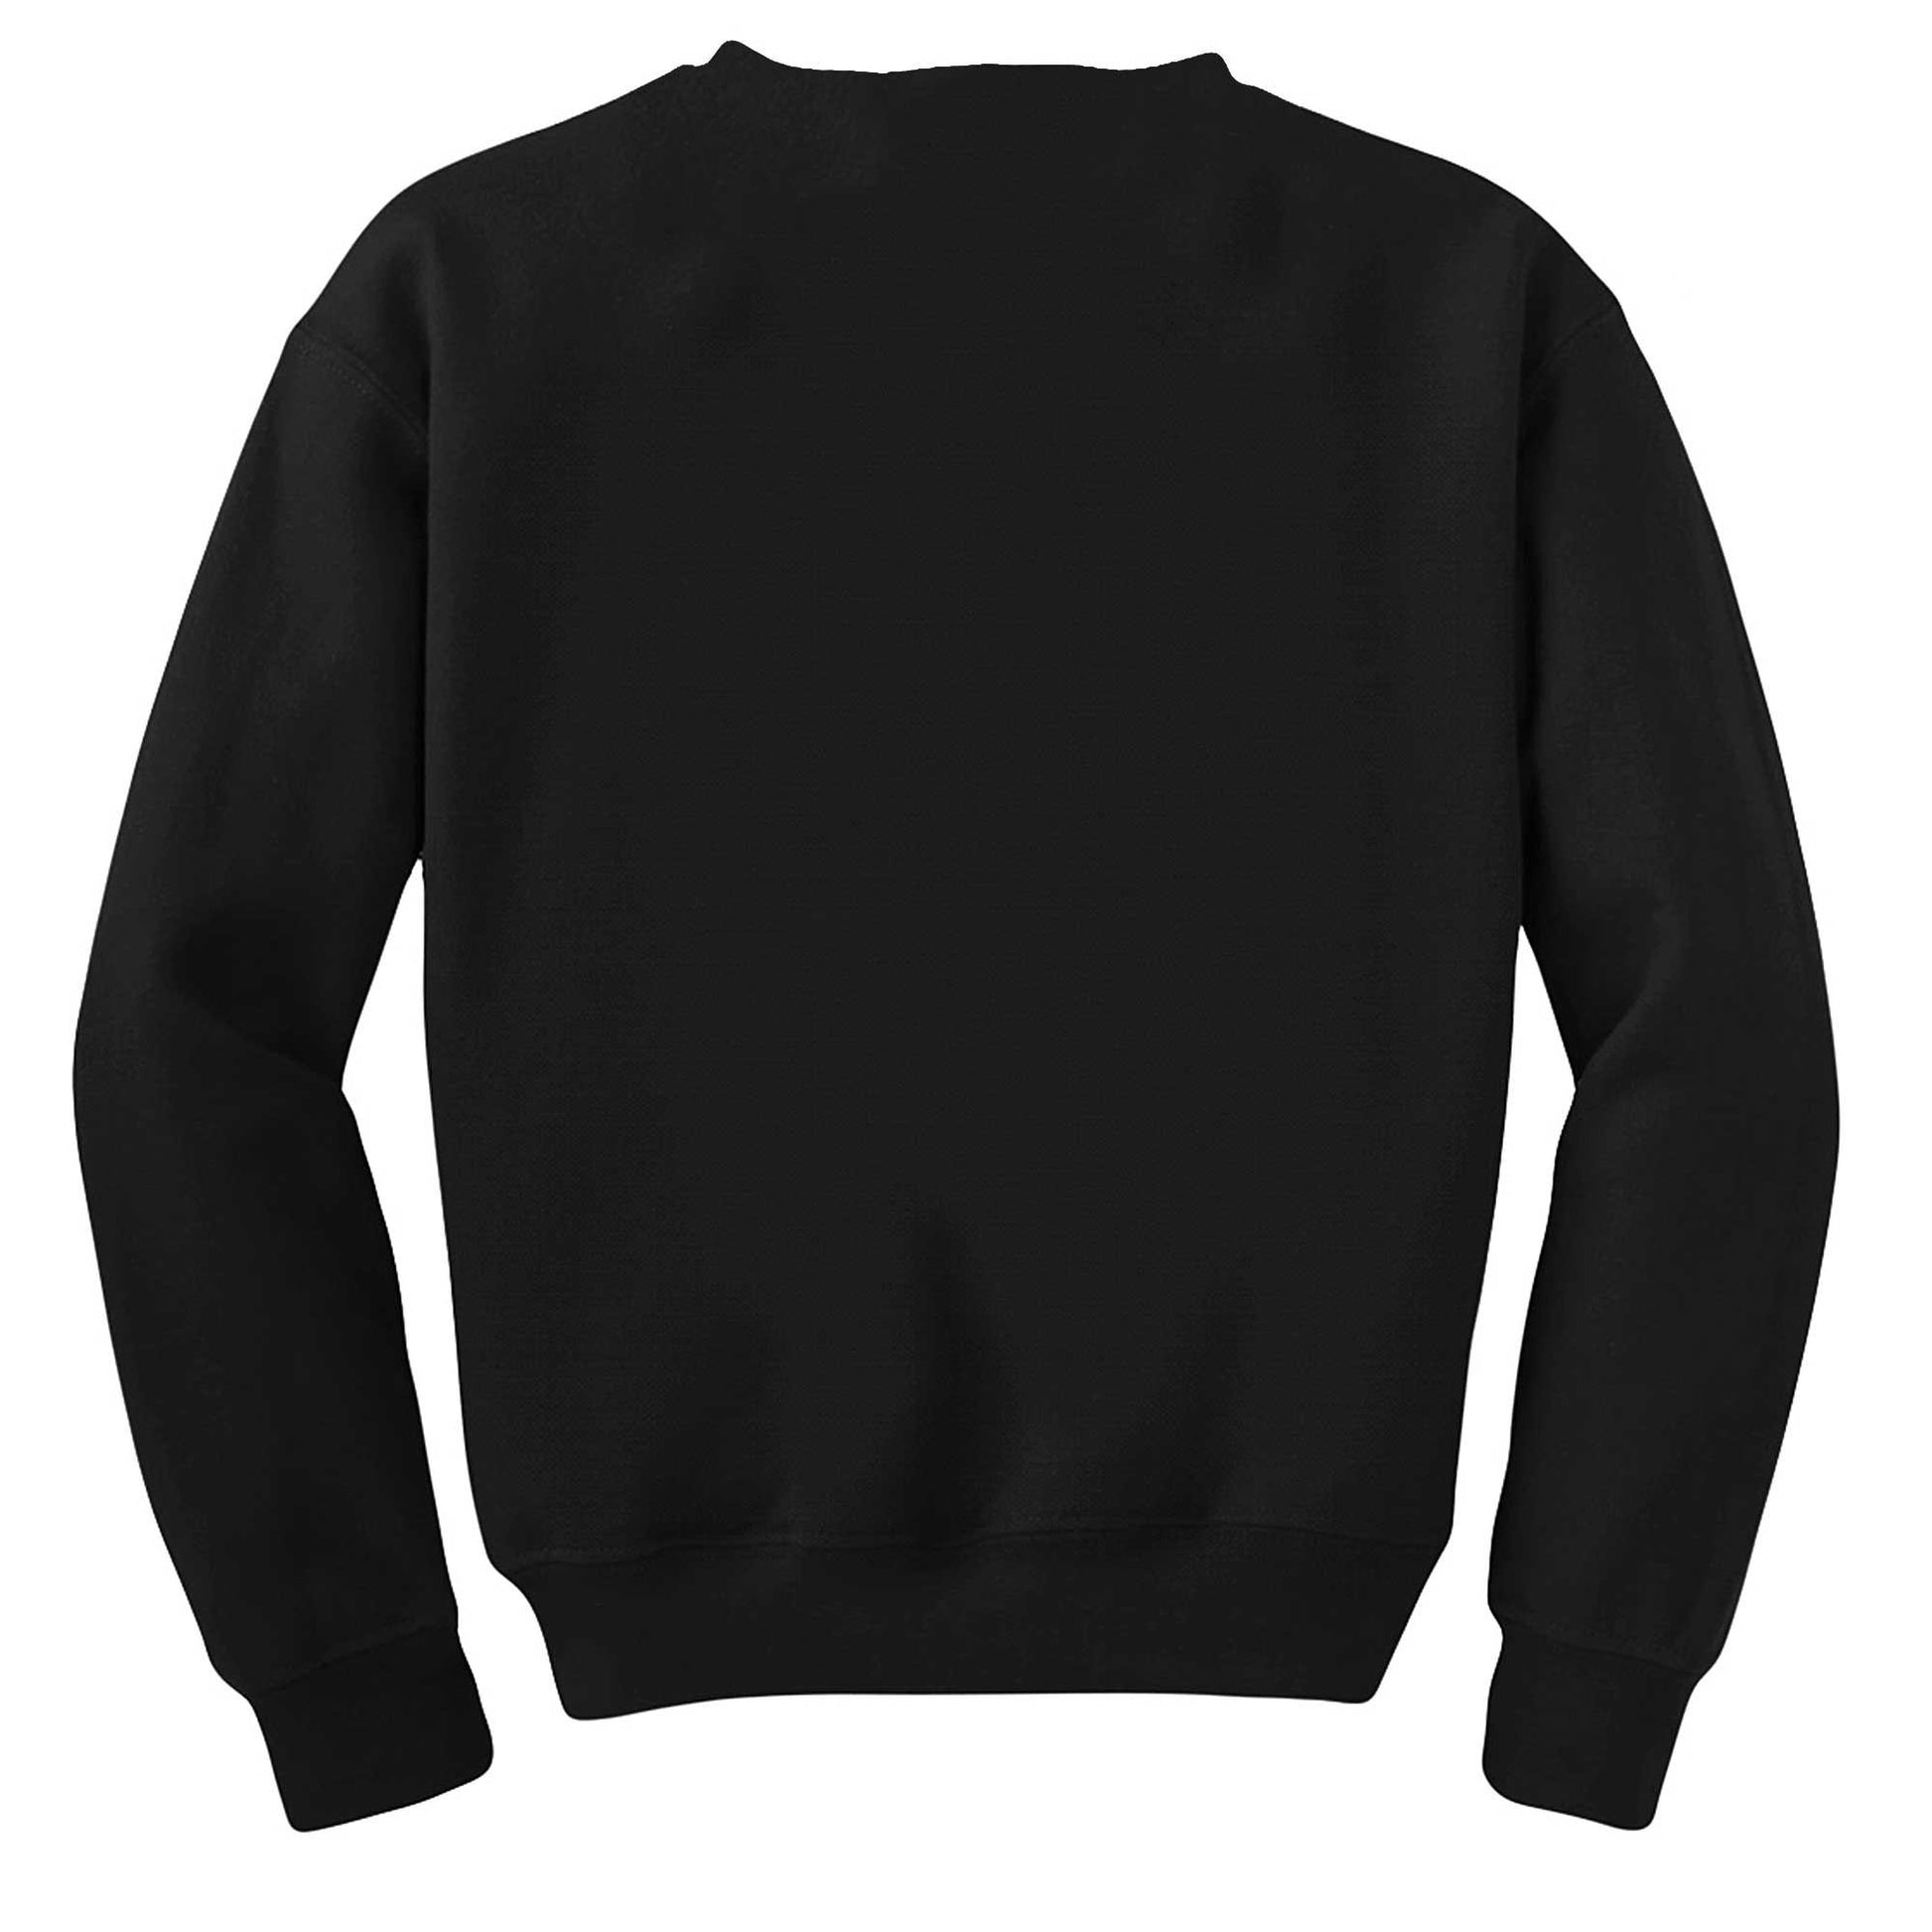 Pirana Balık Siyah Sweatshirt - Zepplingiyim